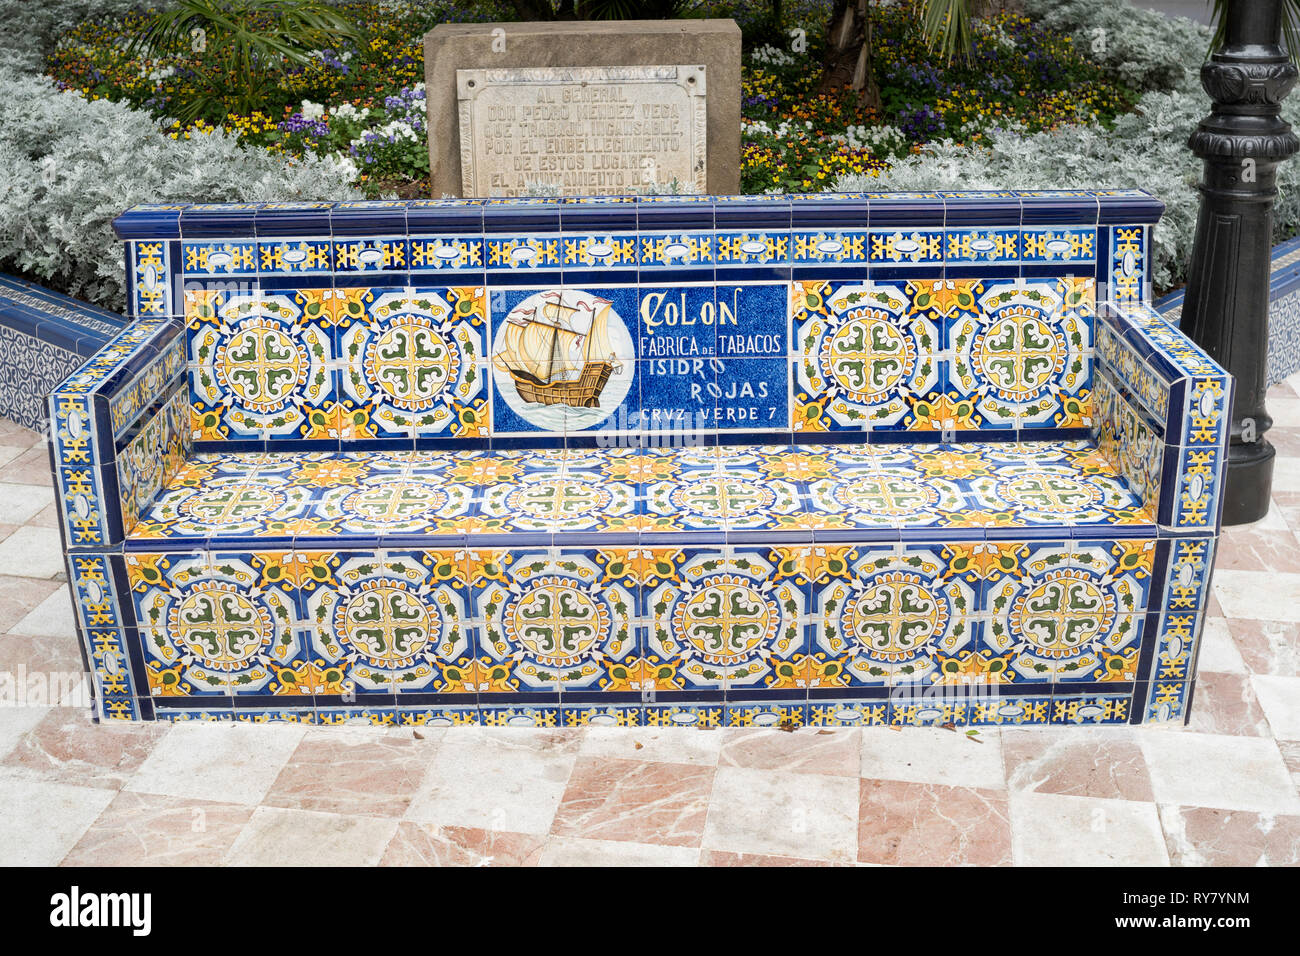 Old Colon tabacos advertising slogan on ceramic tiled bench in the  Plaza de Los Patos in Santa Cruz de Tenerife, Tenerife, Canary Islands Stock Photo